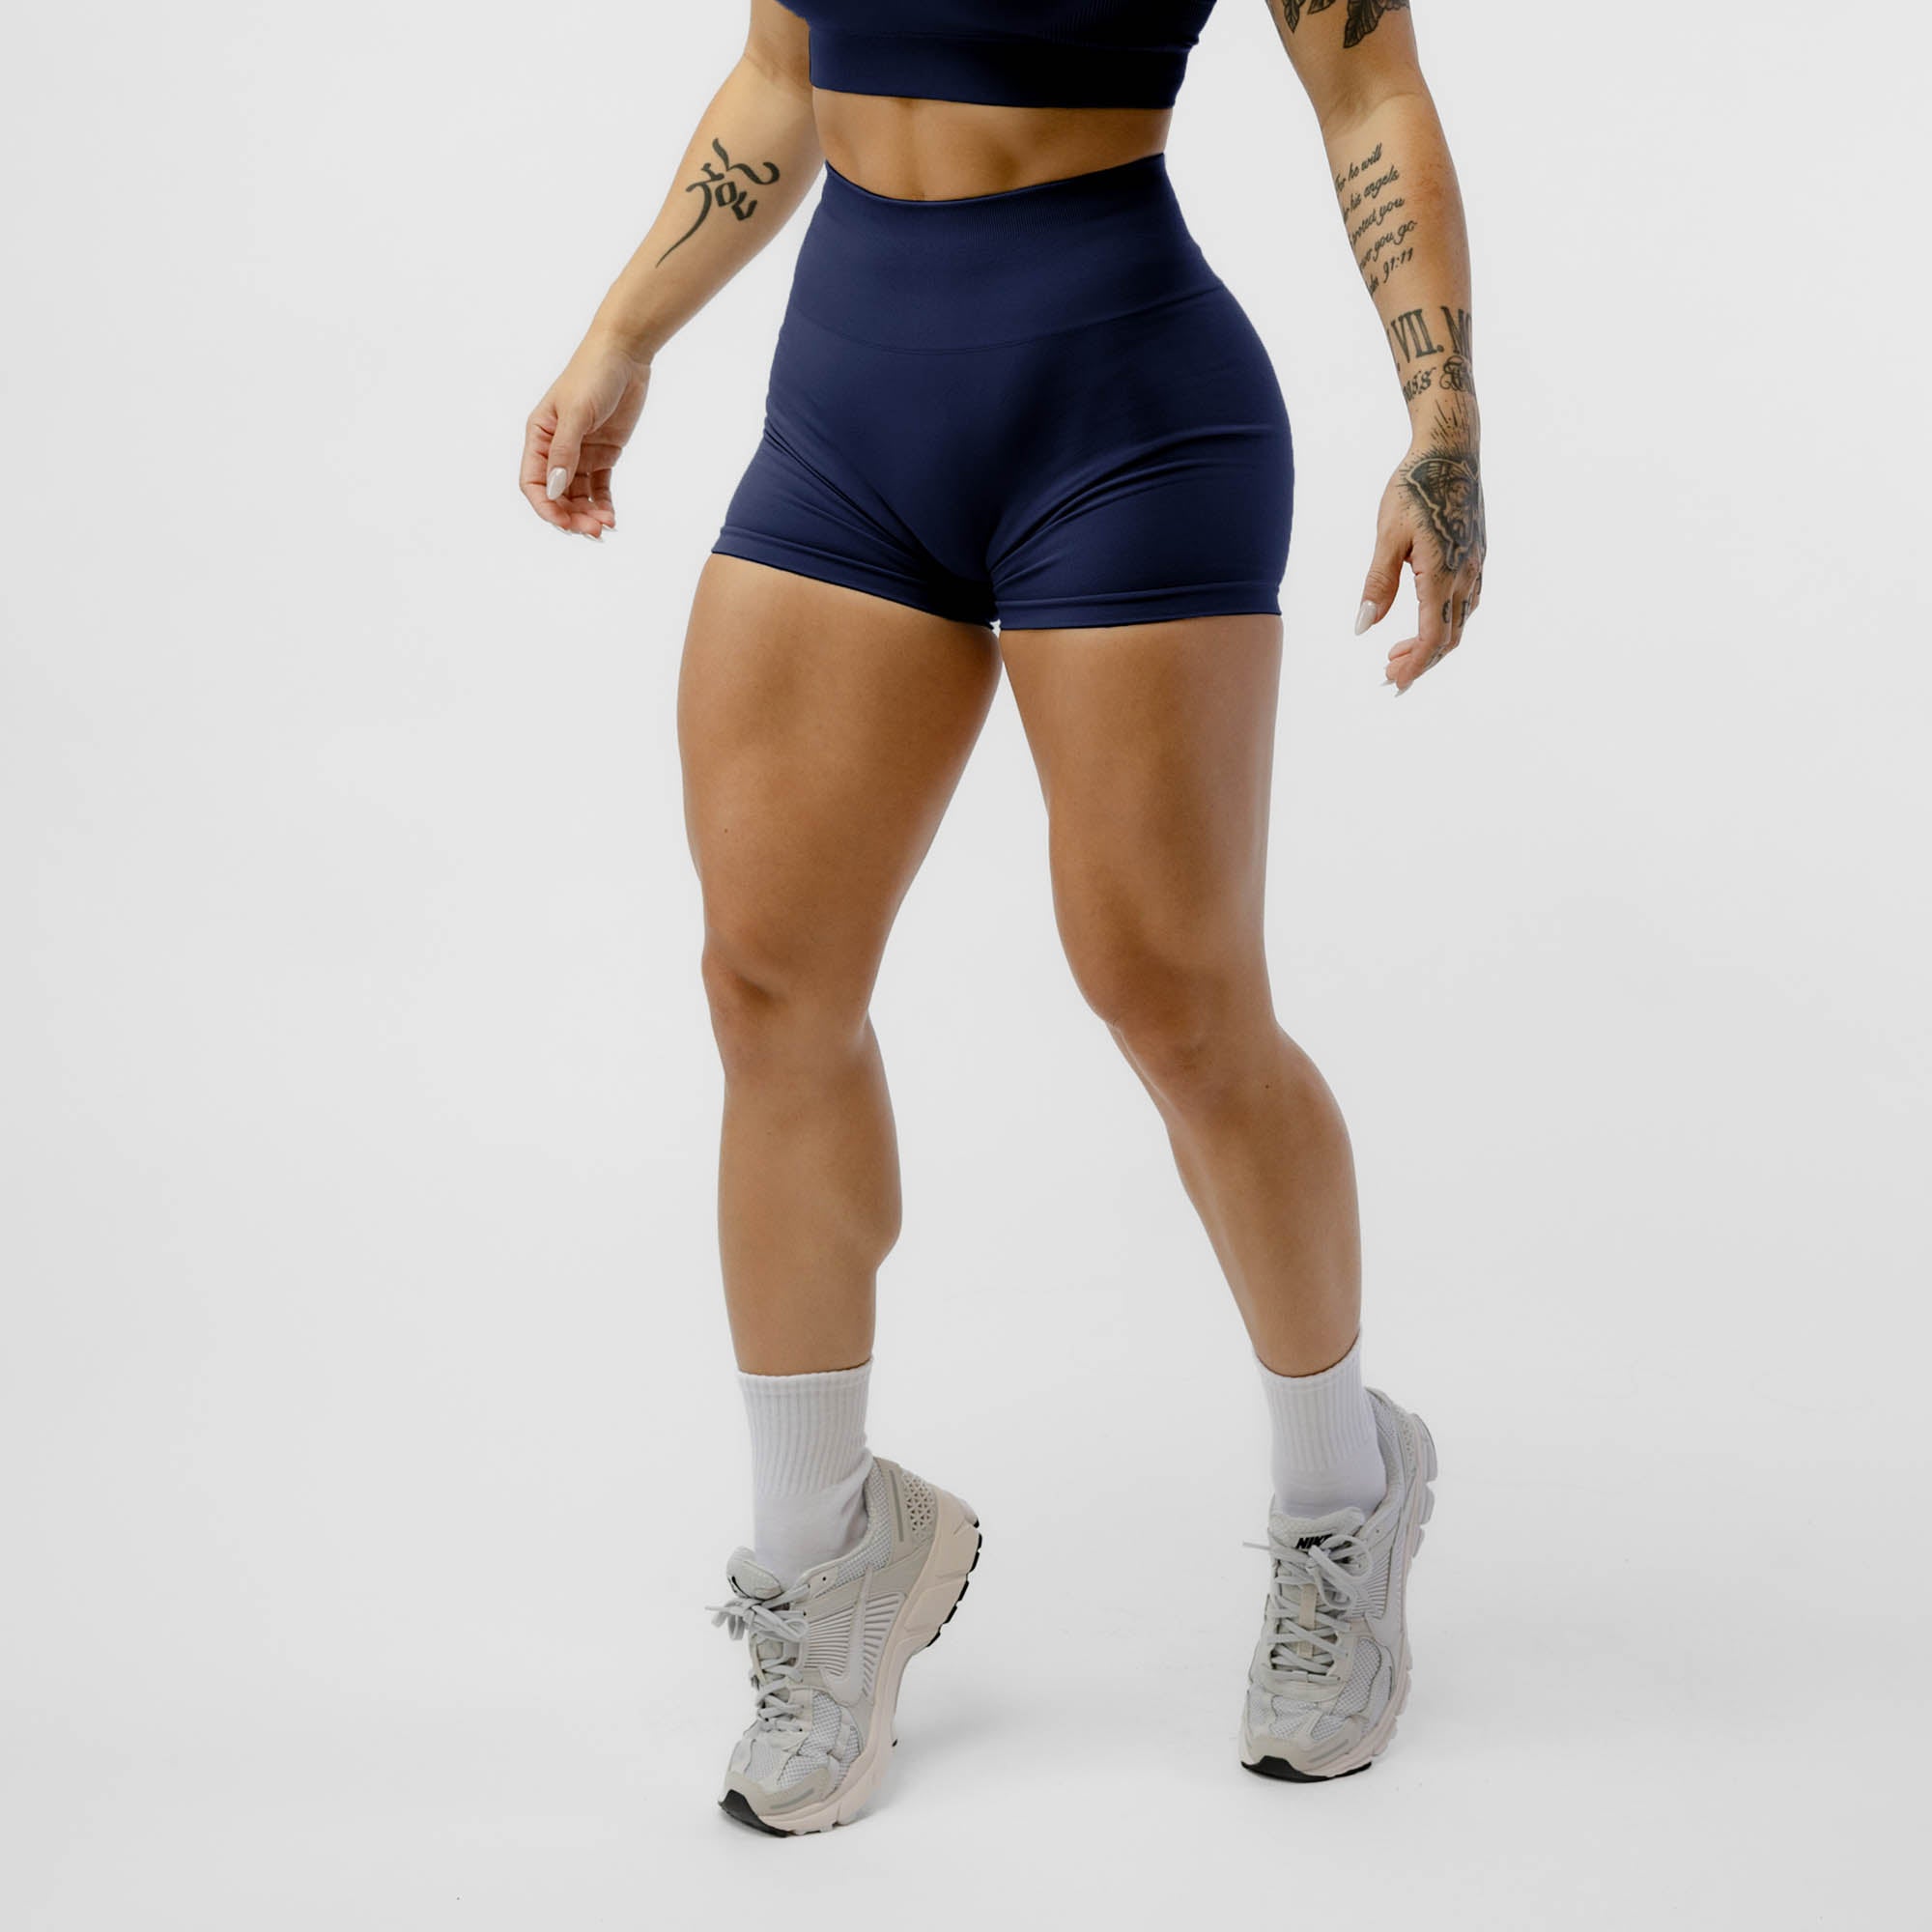 SUPERFLOWER Fitness Women Shorts Push Up Sexy Hip Workout Running